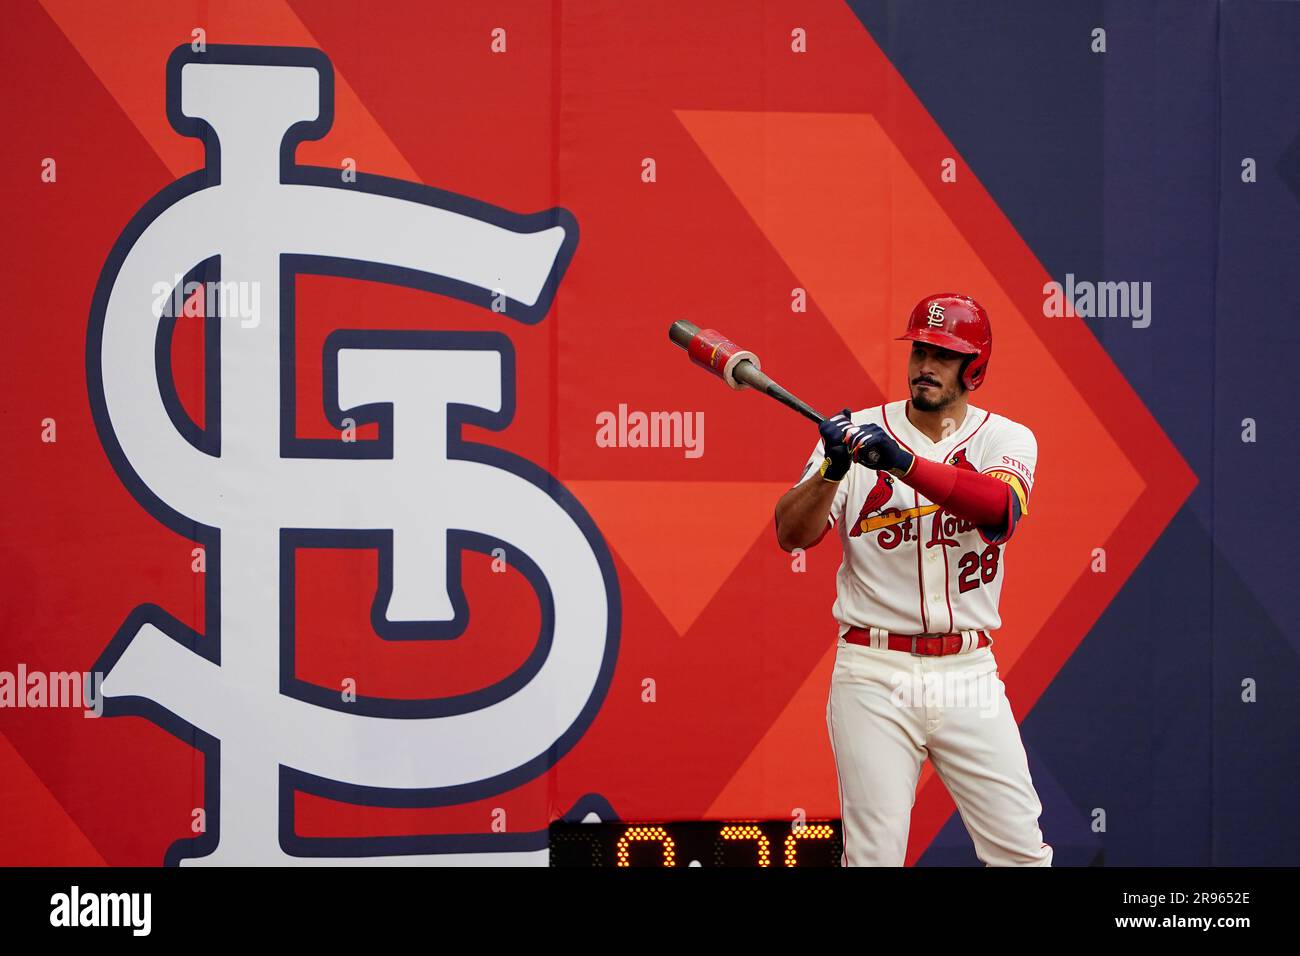 Pin by JR on Baseball  Cardinals wallpaper, St louis cardinals baseball, Stl  cardinals baseball